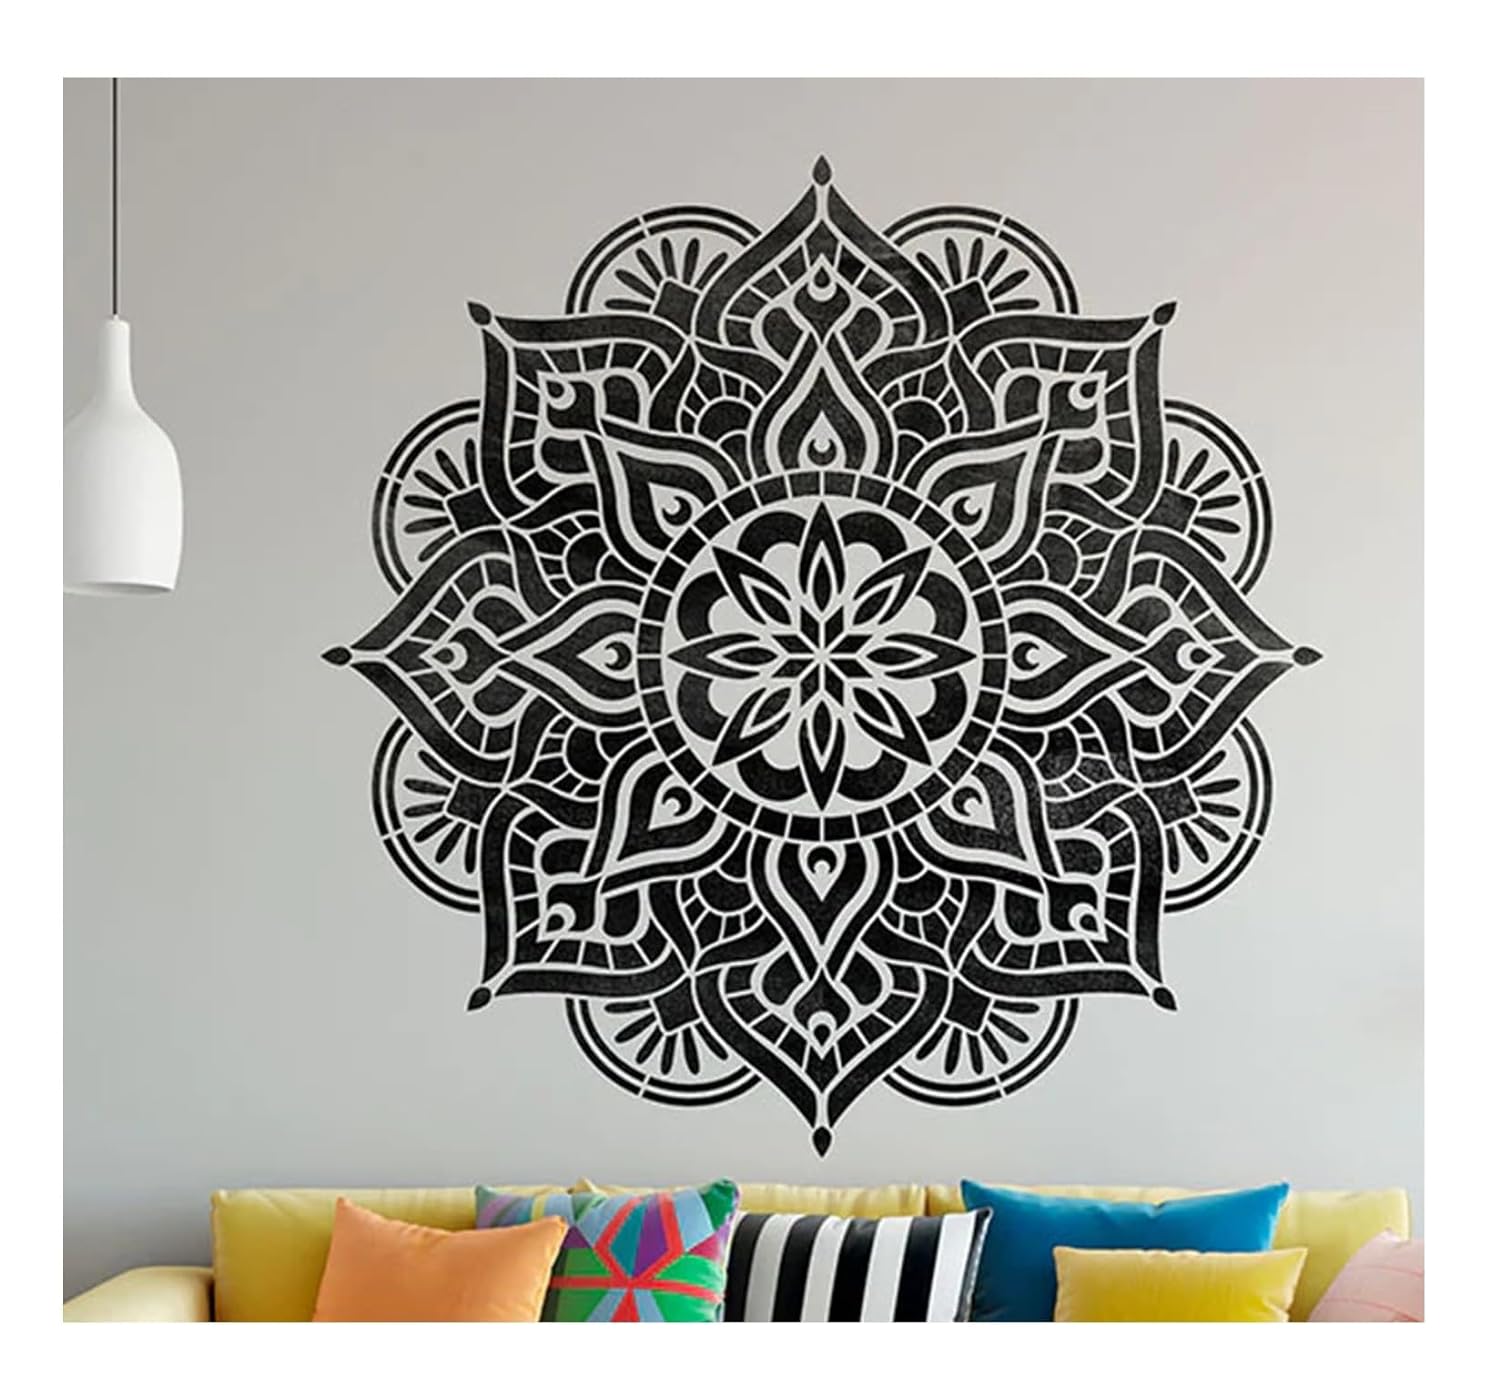 Large Mandala Wall Art Stencils for Painting Boho Bedroom Mural Design